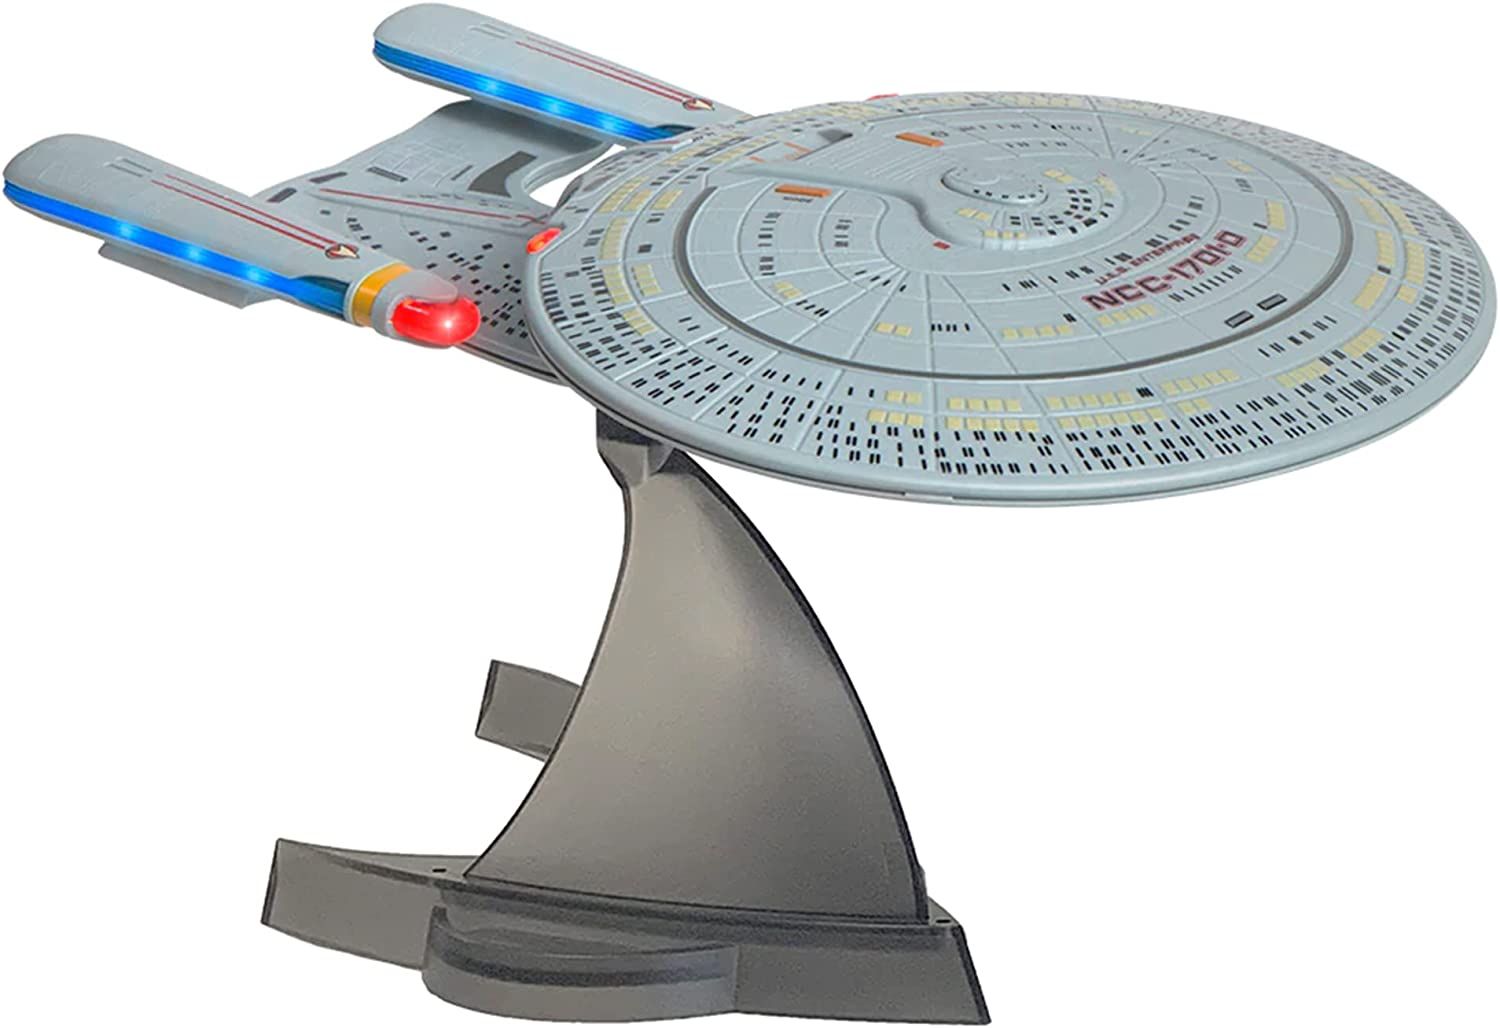 Star Trek Enterprise Replica Bluetooth Speaker is one of the best accessories for Star Trek fans